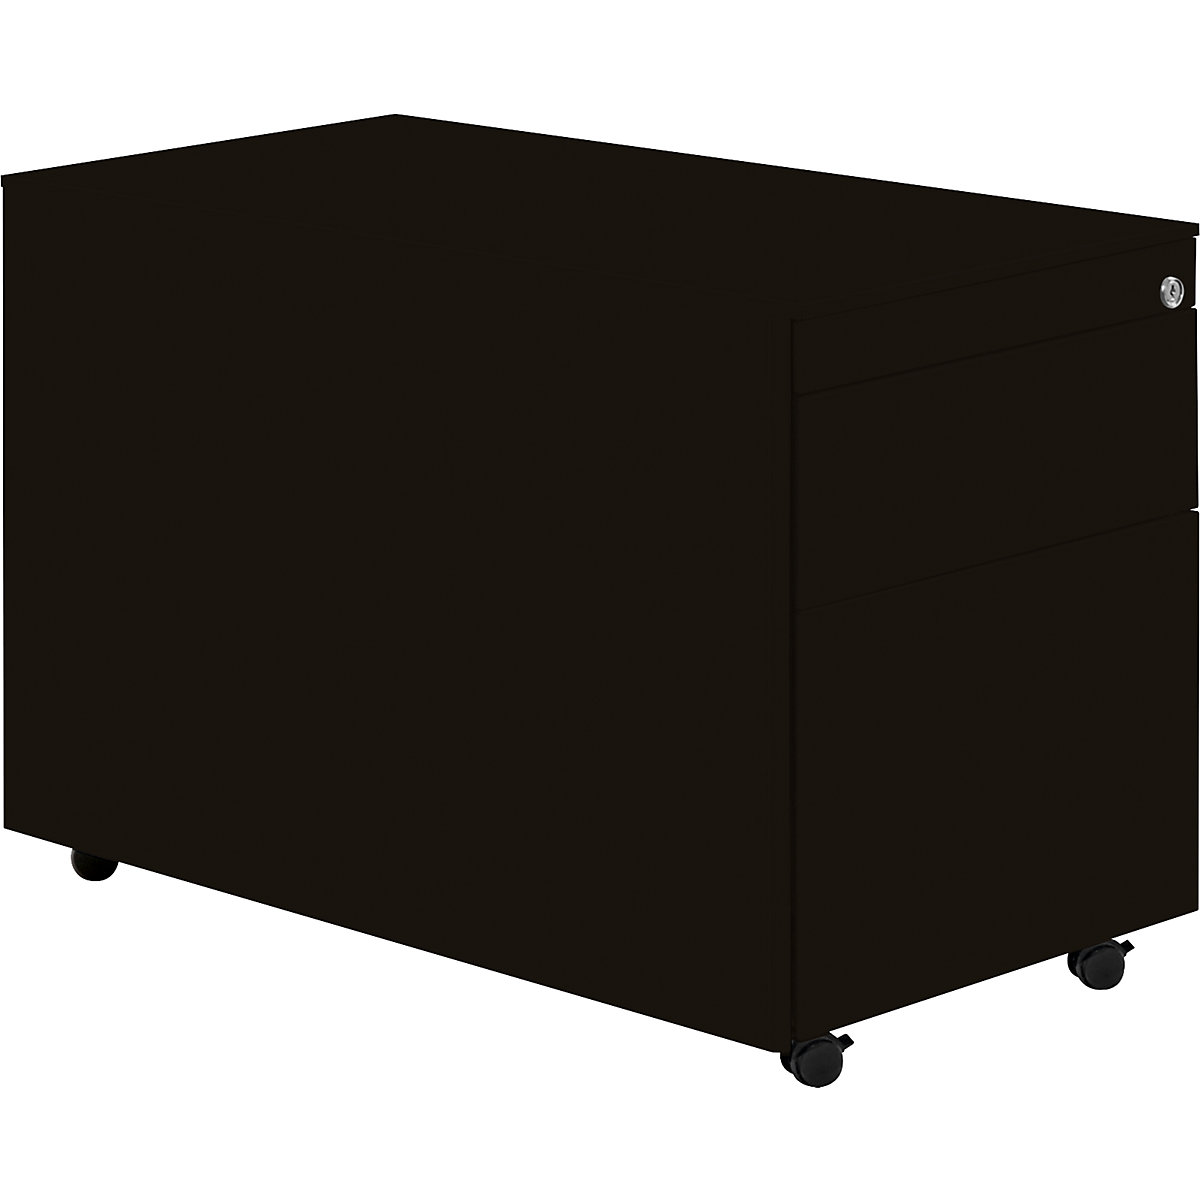 Drawer pedestal with castors – mauser, HxD 570 x 800 mm, 1 drawer, 1 suspension file drawer, graphite black / graphite black / graphite black-10